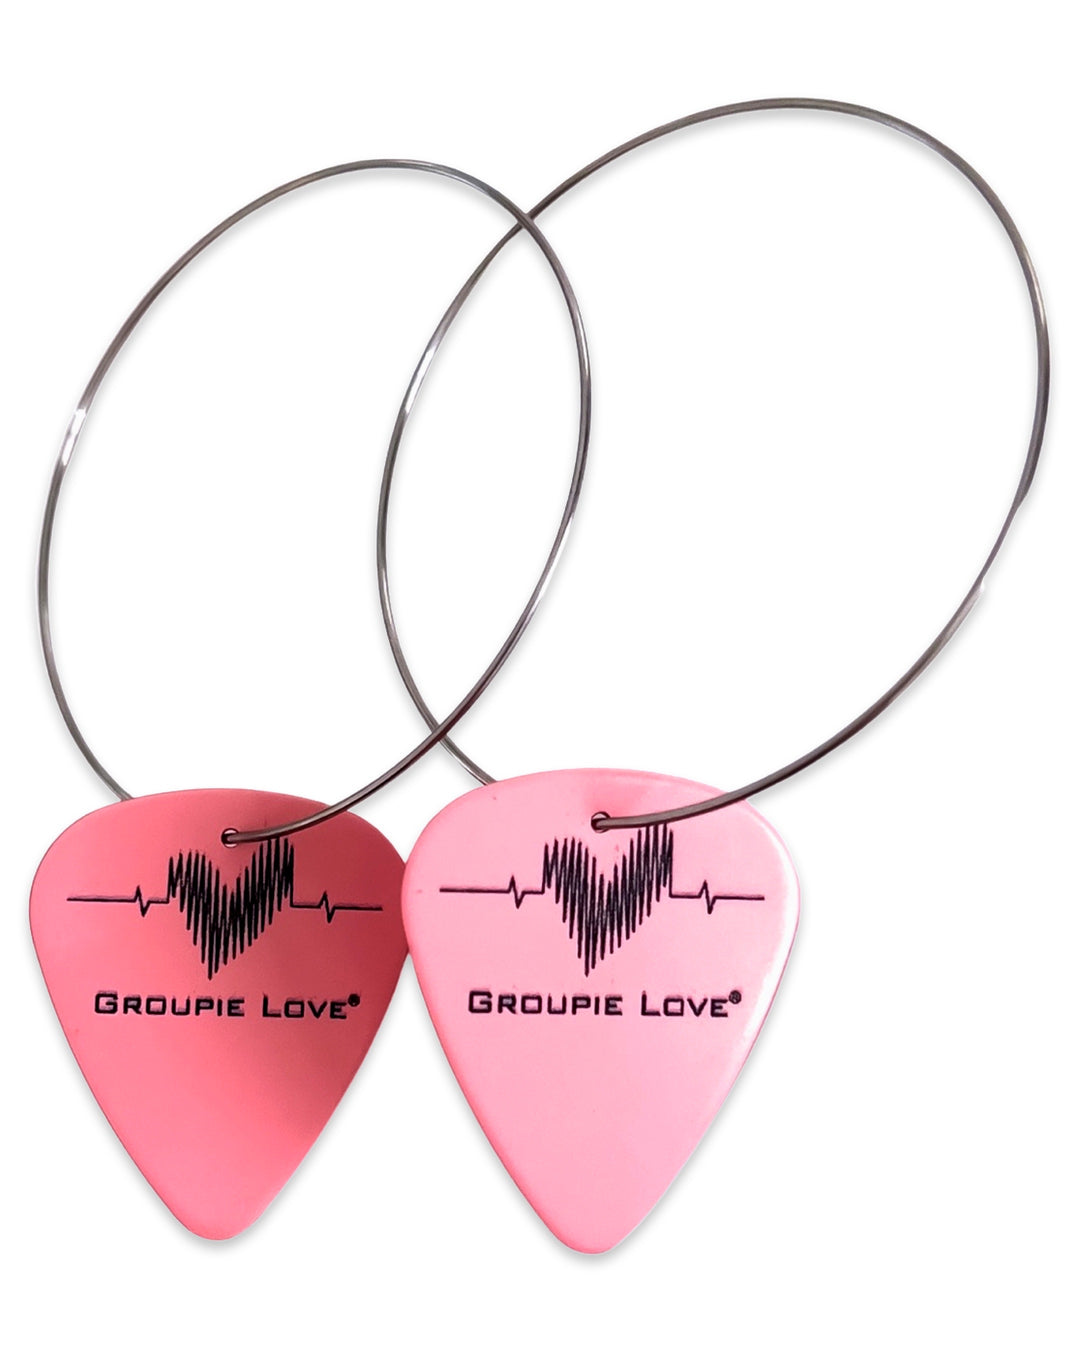 Groupie Love Pink Single Guitar Pick Earrings